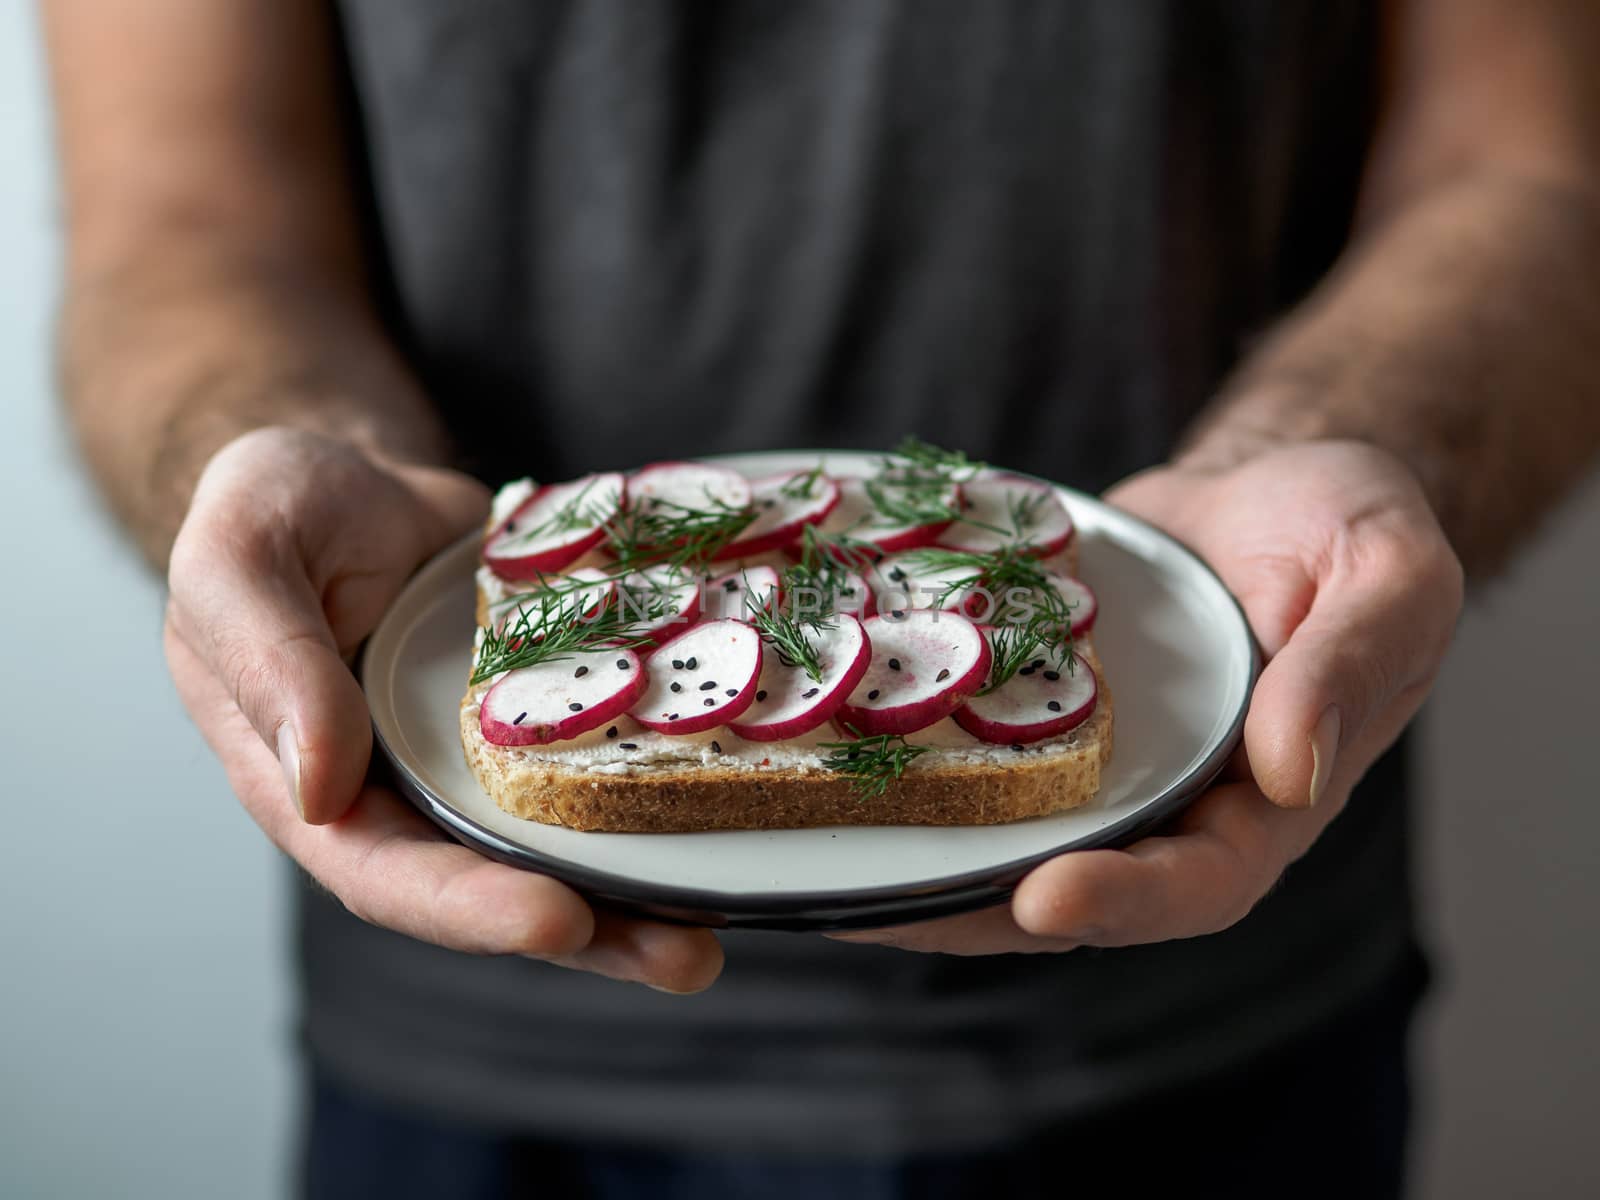 Vegan sandwich with radish in male hands by fascinadora